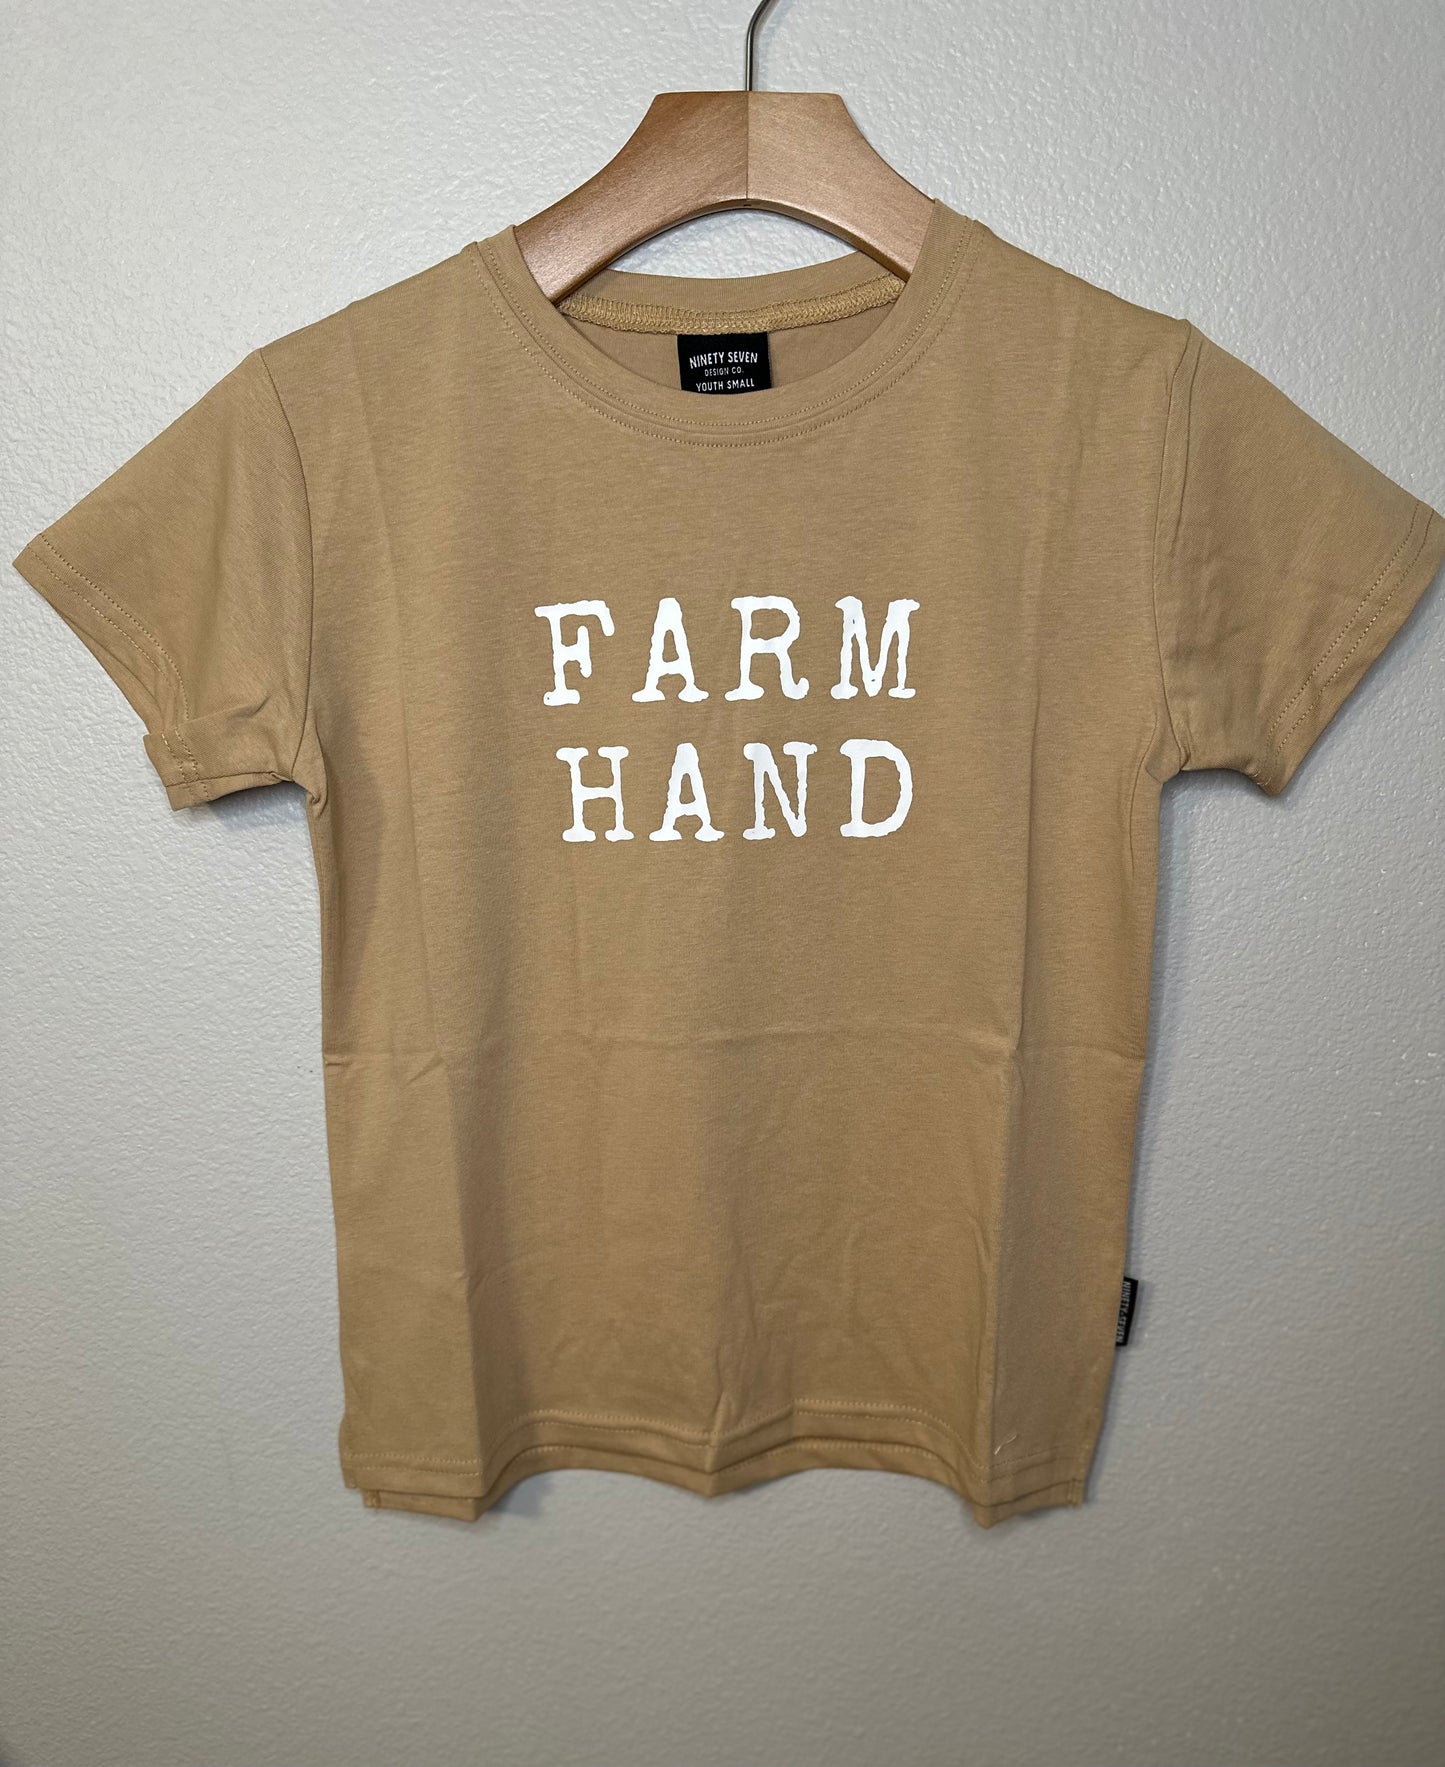 Farm Hand - Beige Kids Tee